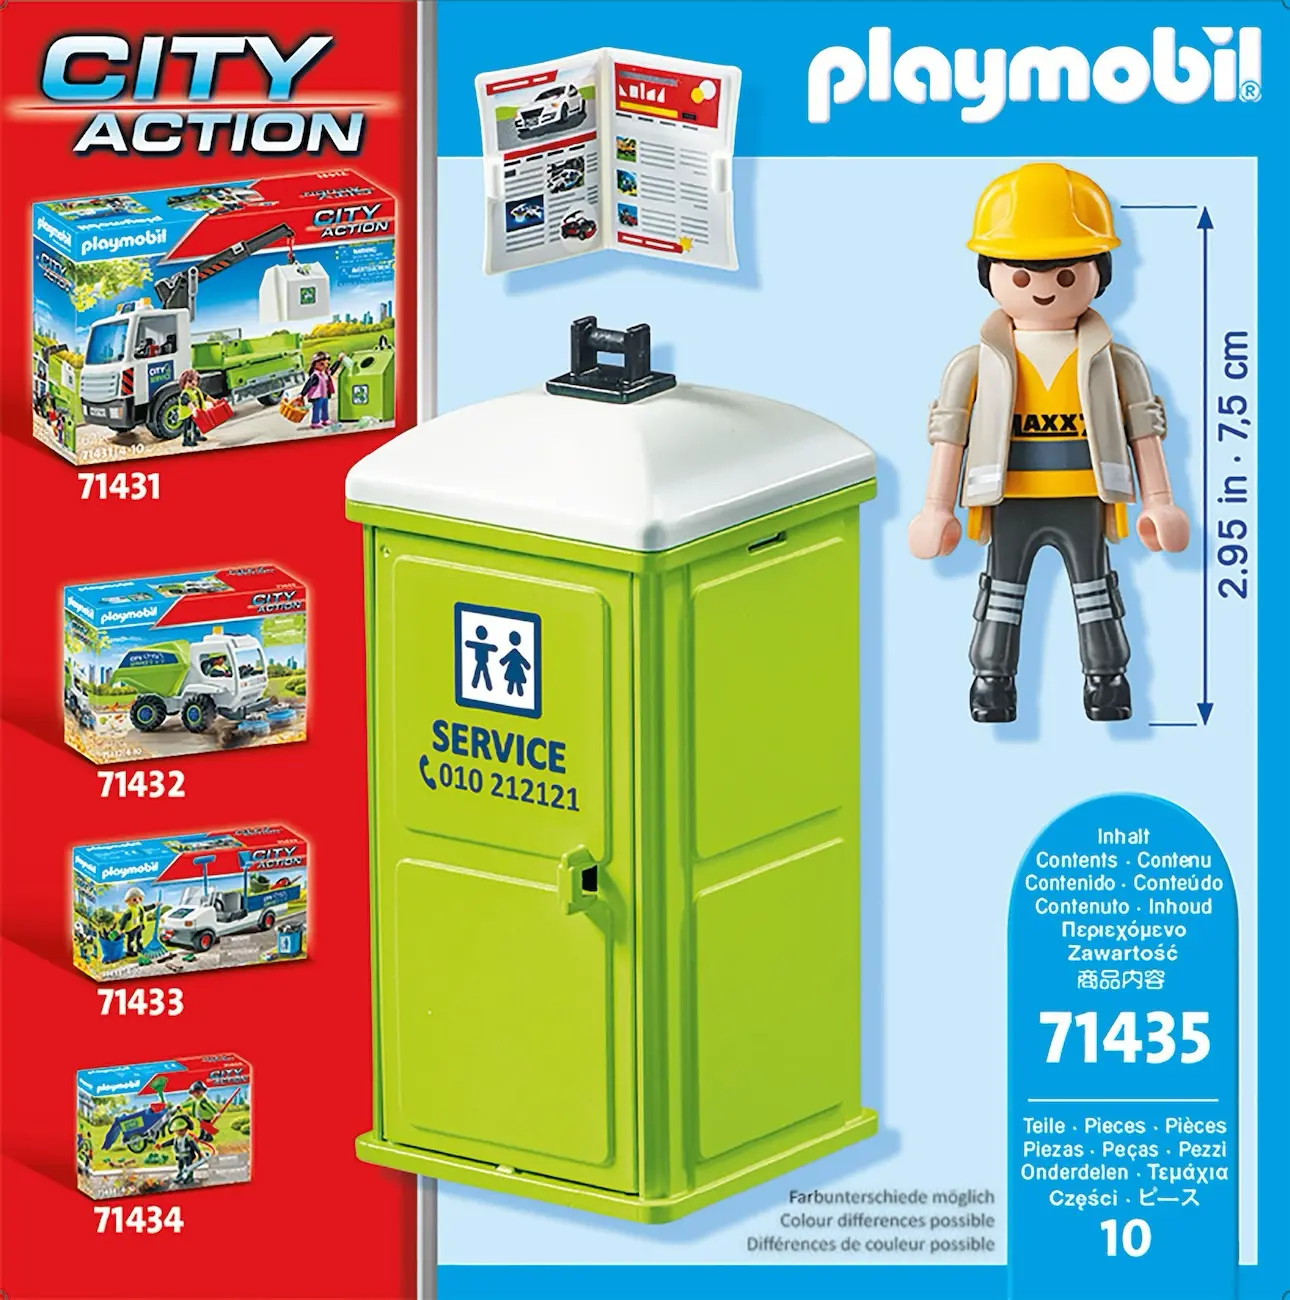 Playmobil 71435 - Mobile Toilette - City Action